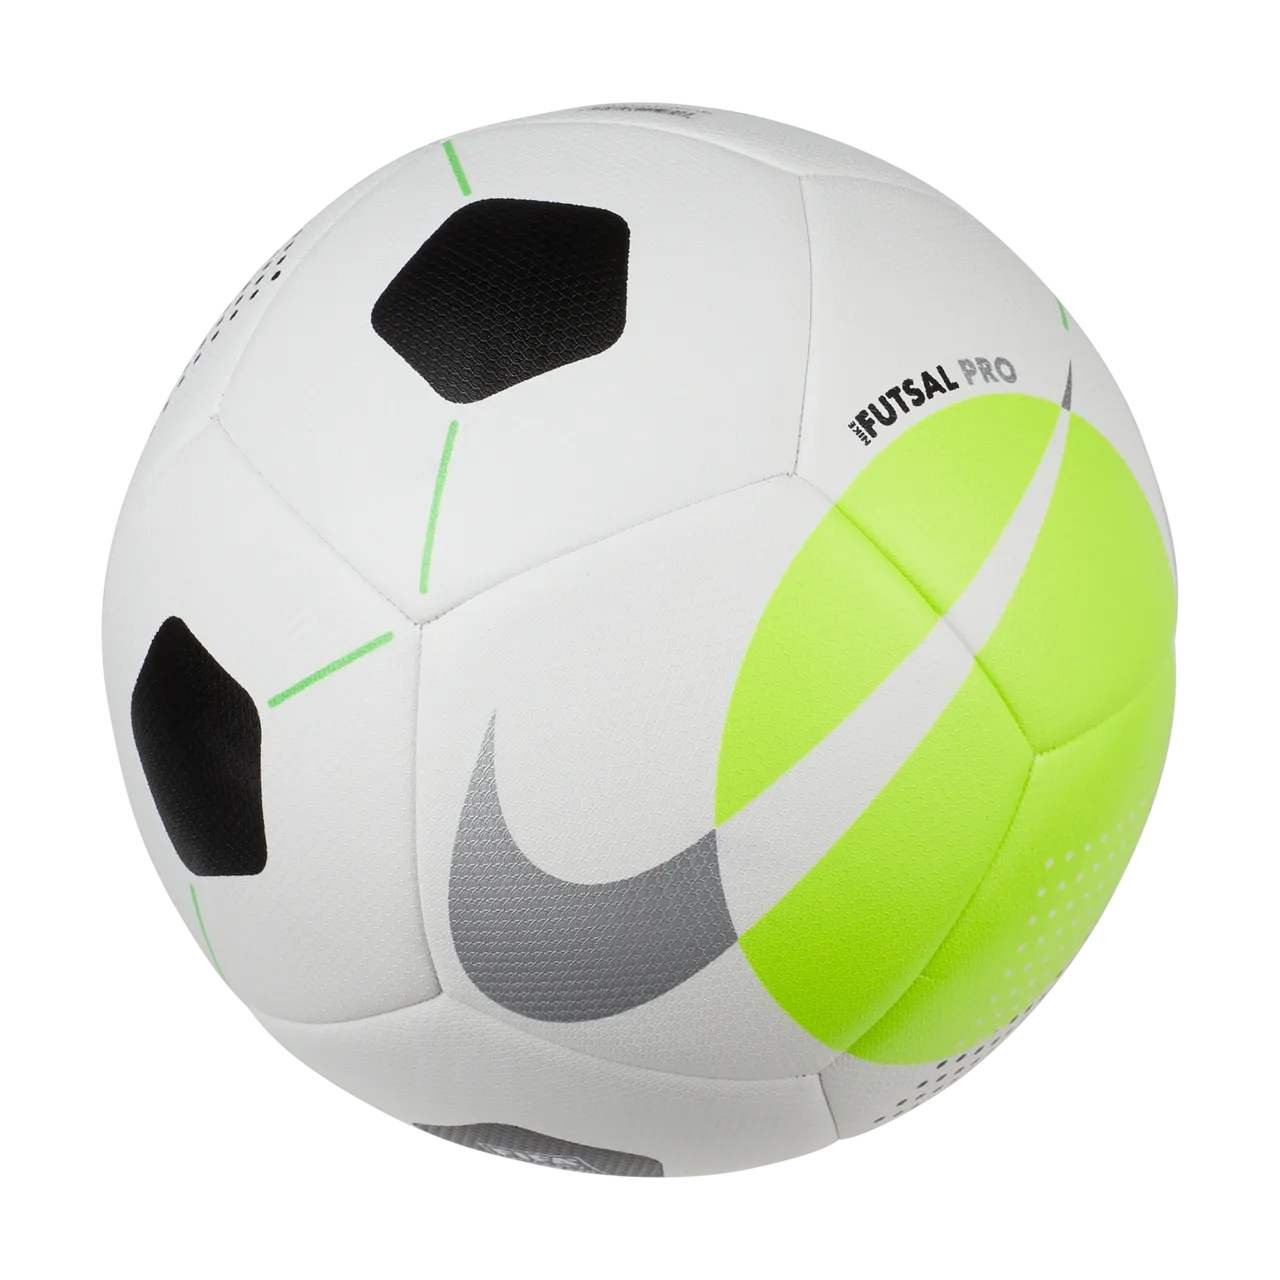 Nike Futsal Pro Football - White - Polyester